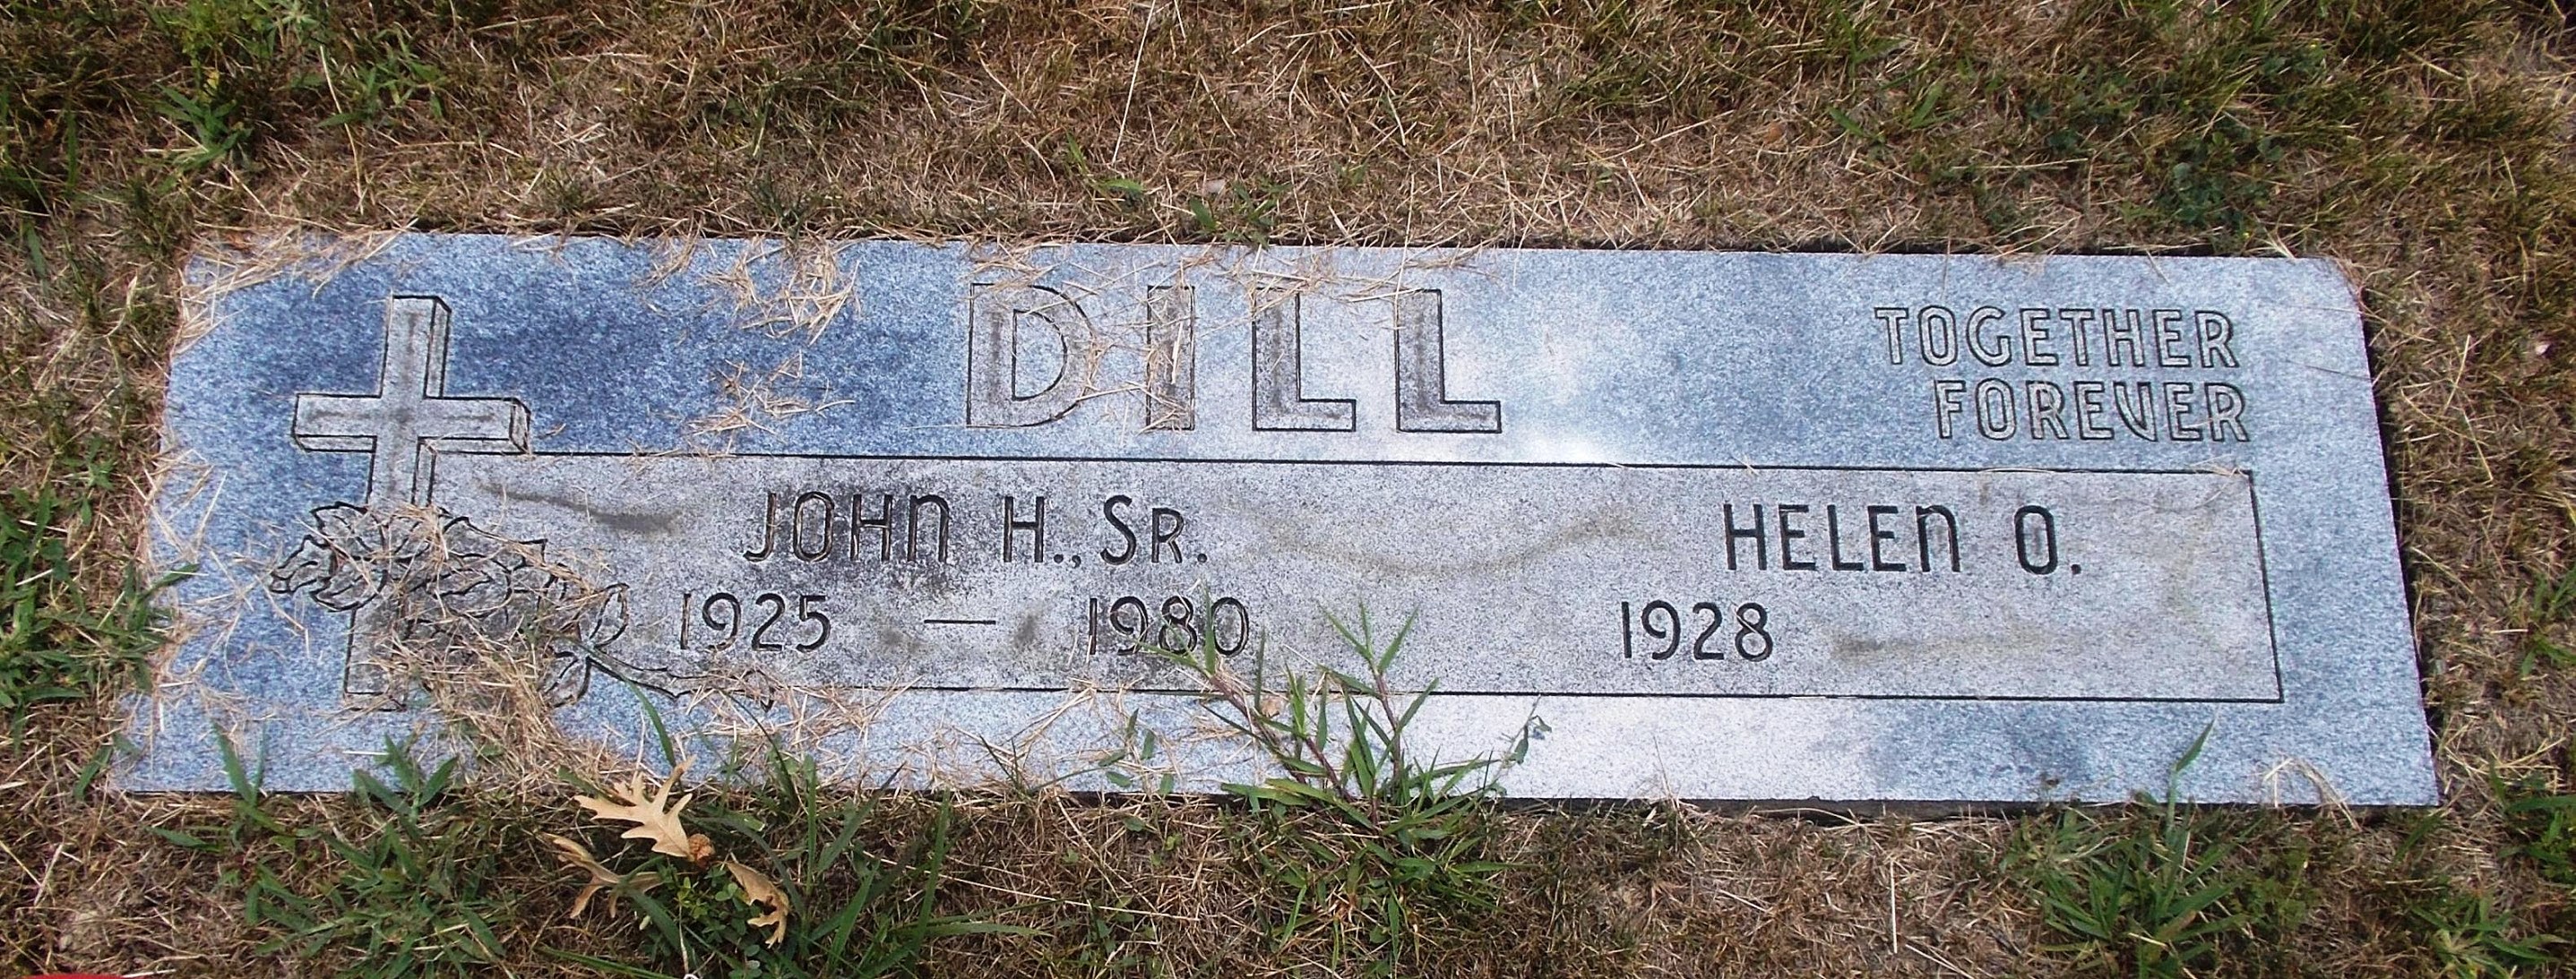 John H Dill, Sr